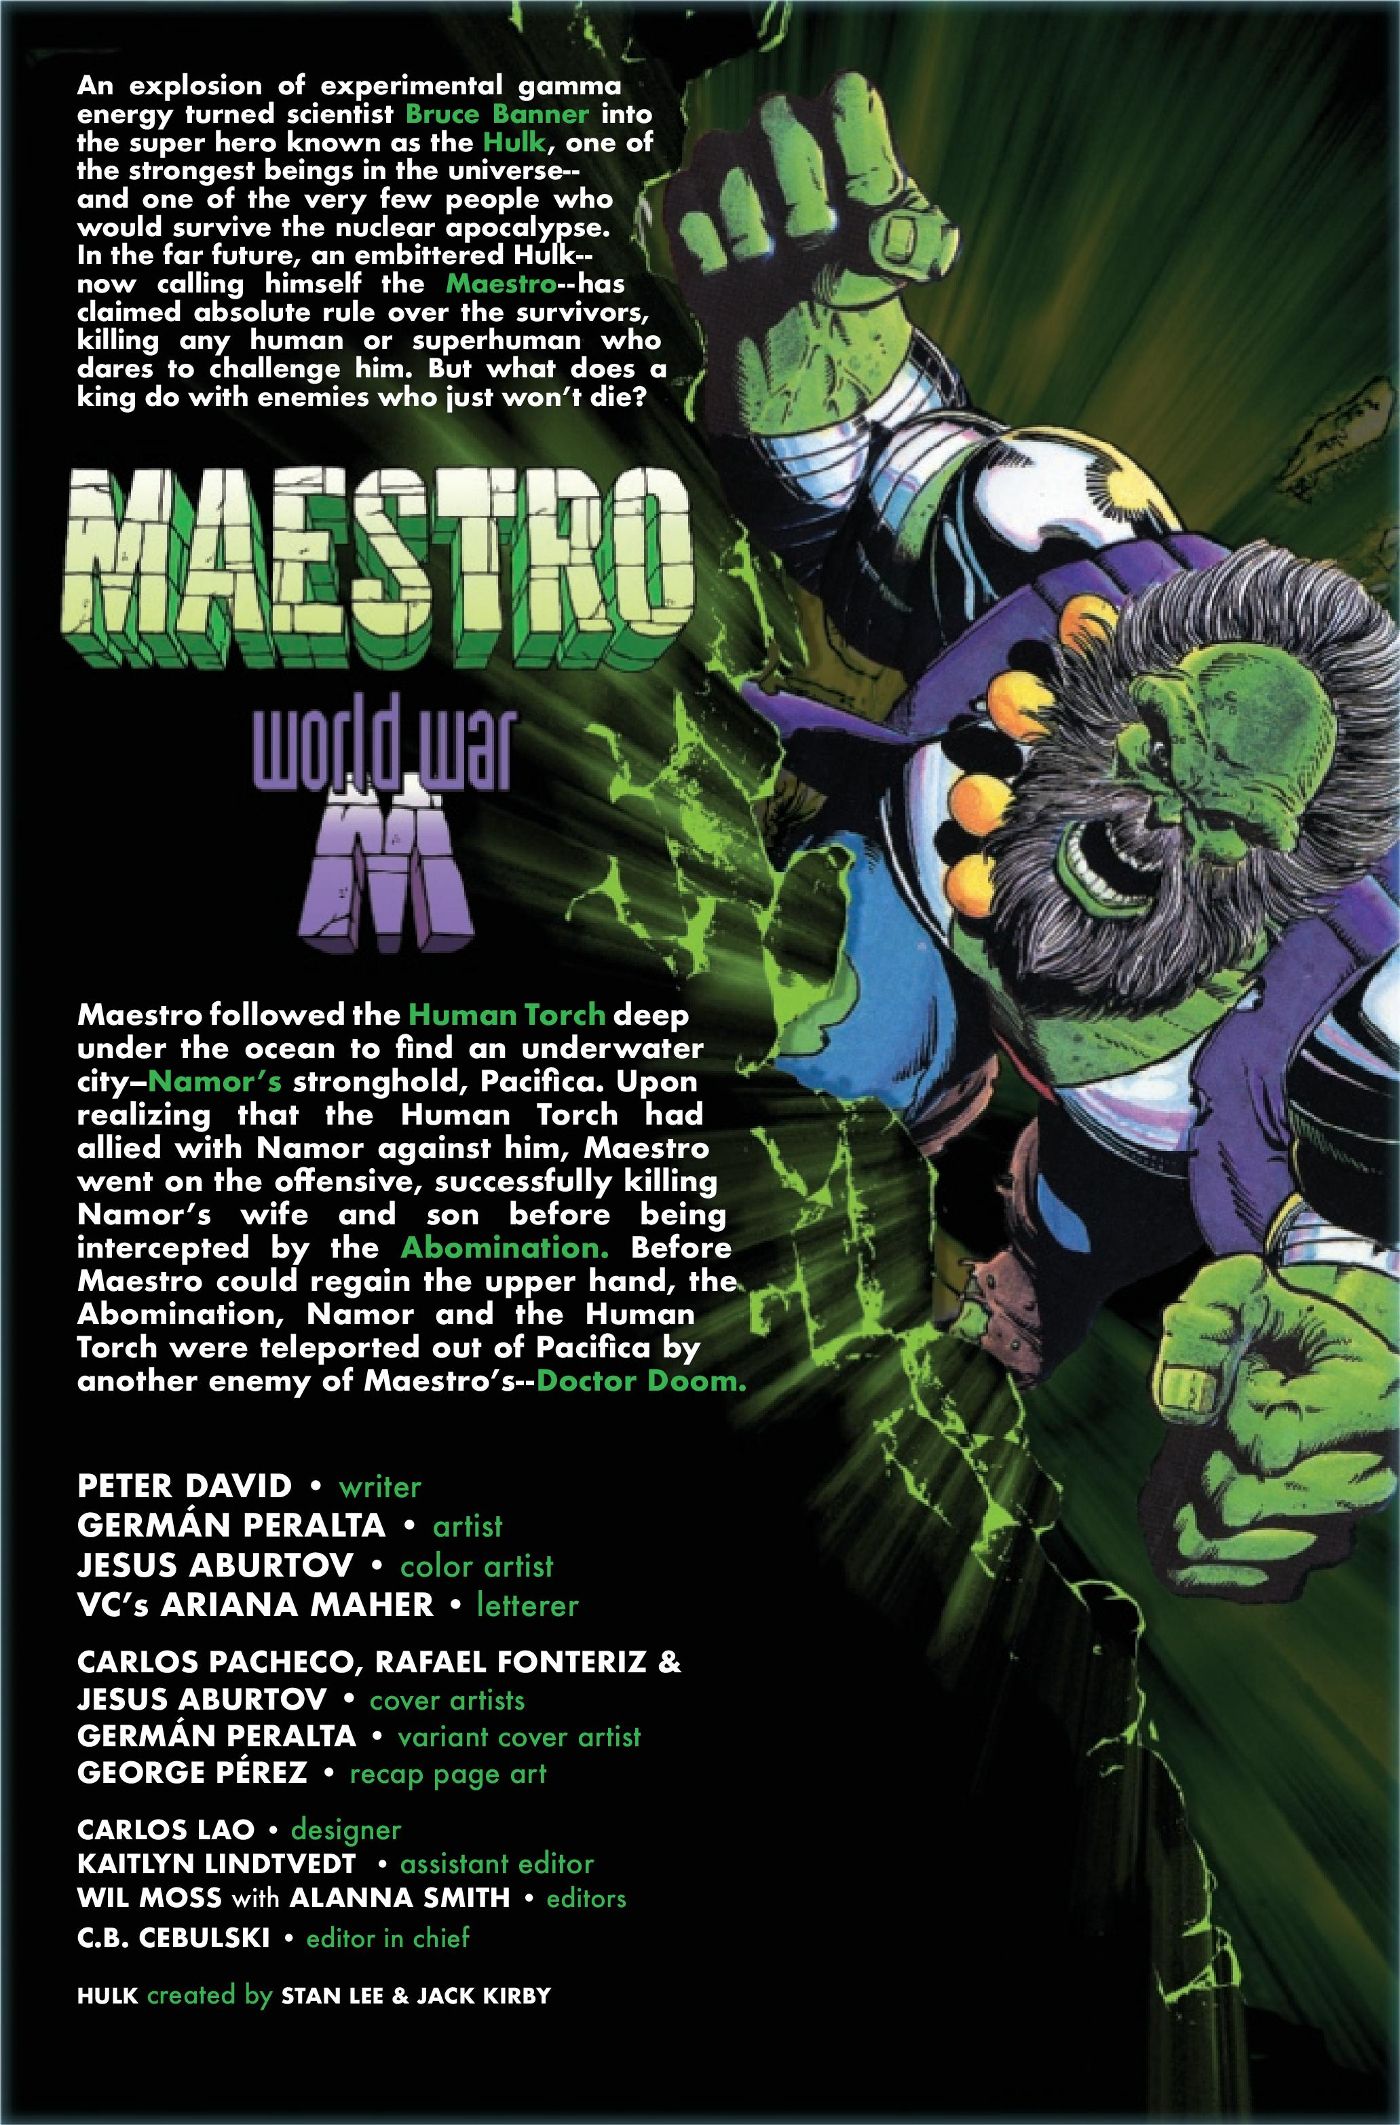 Maestro World War M 3 credits page